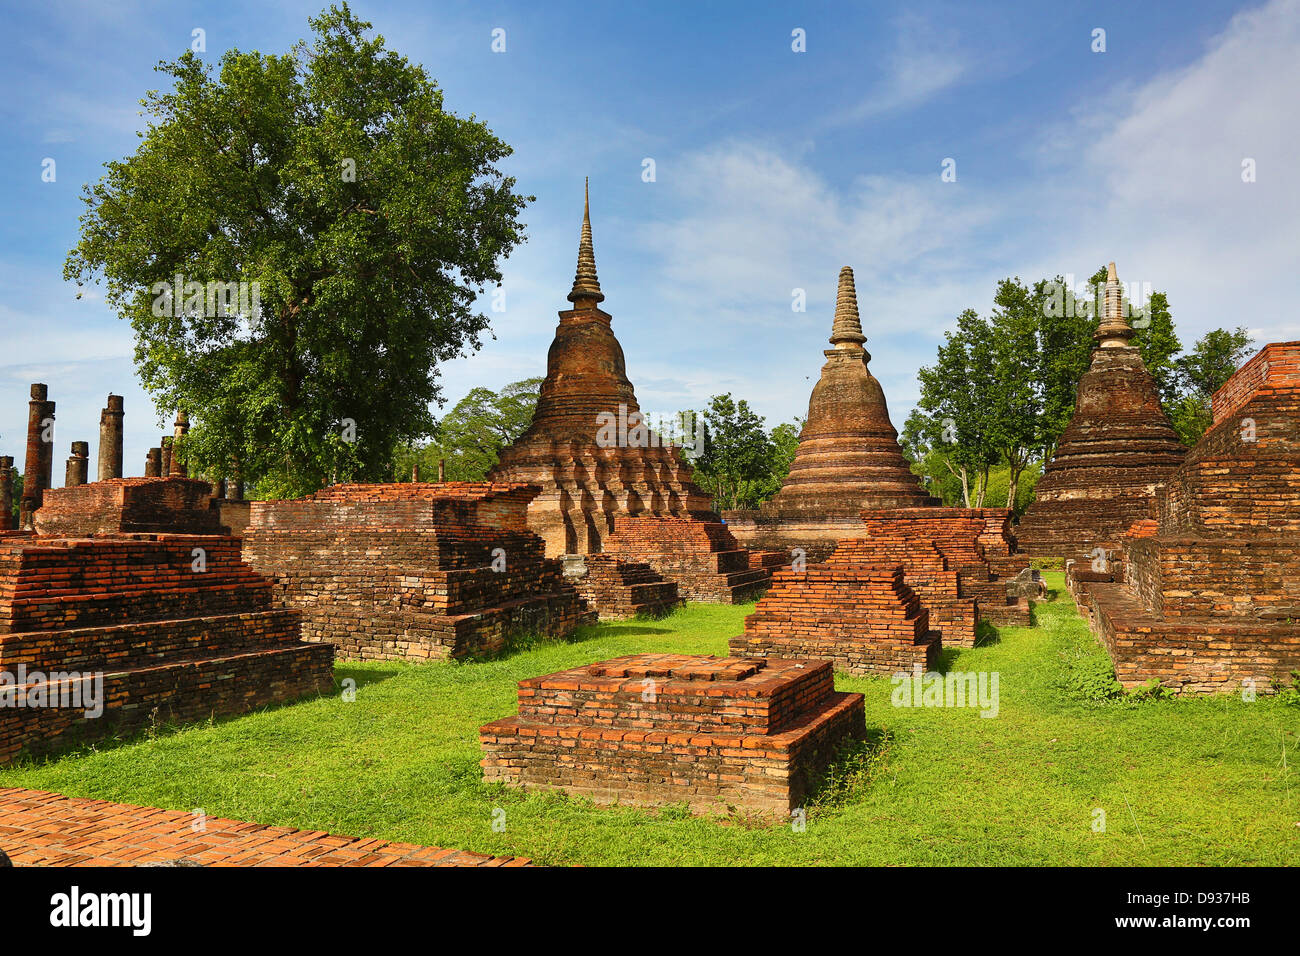 Wat Mahathat temple, Sukhotai Historical Park, Sukhotai, Thailand  Stock Photo